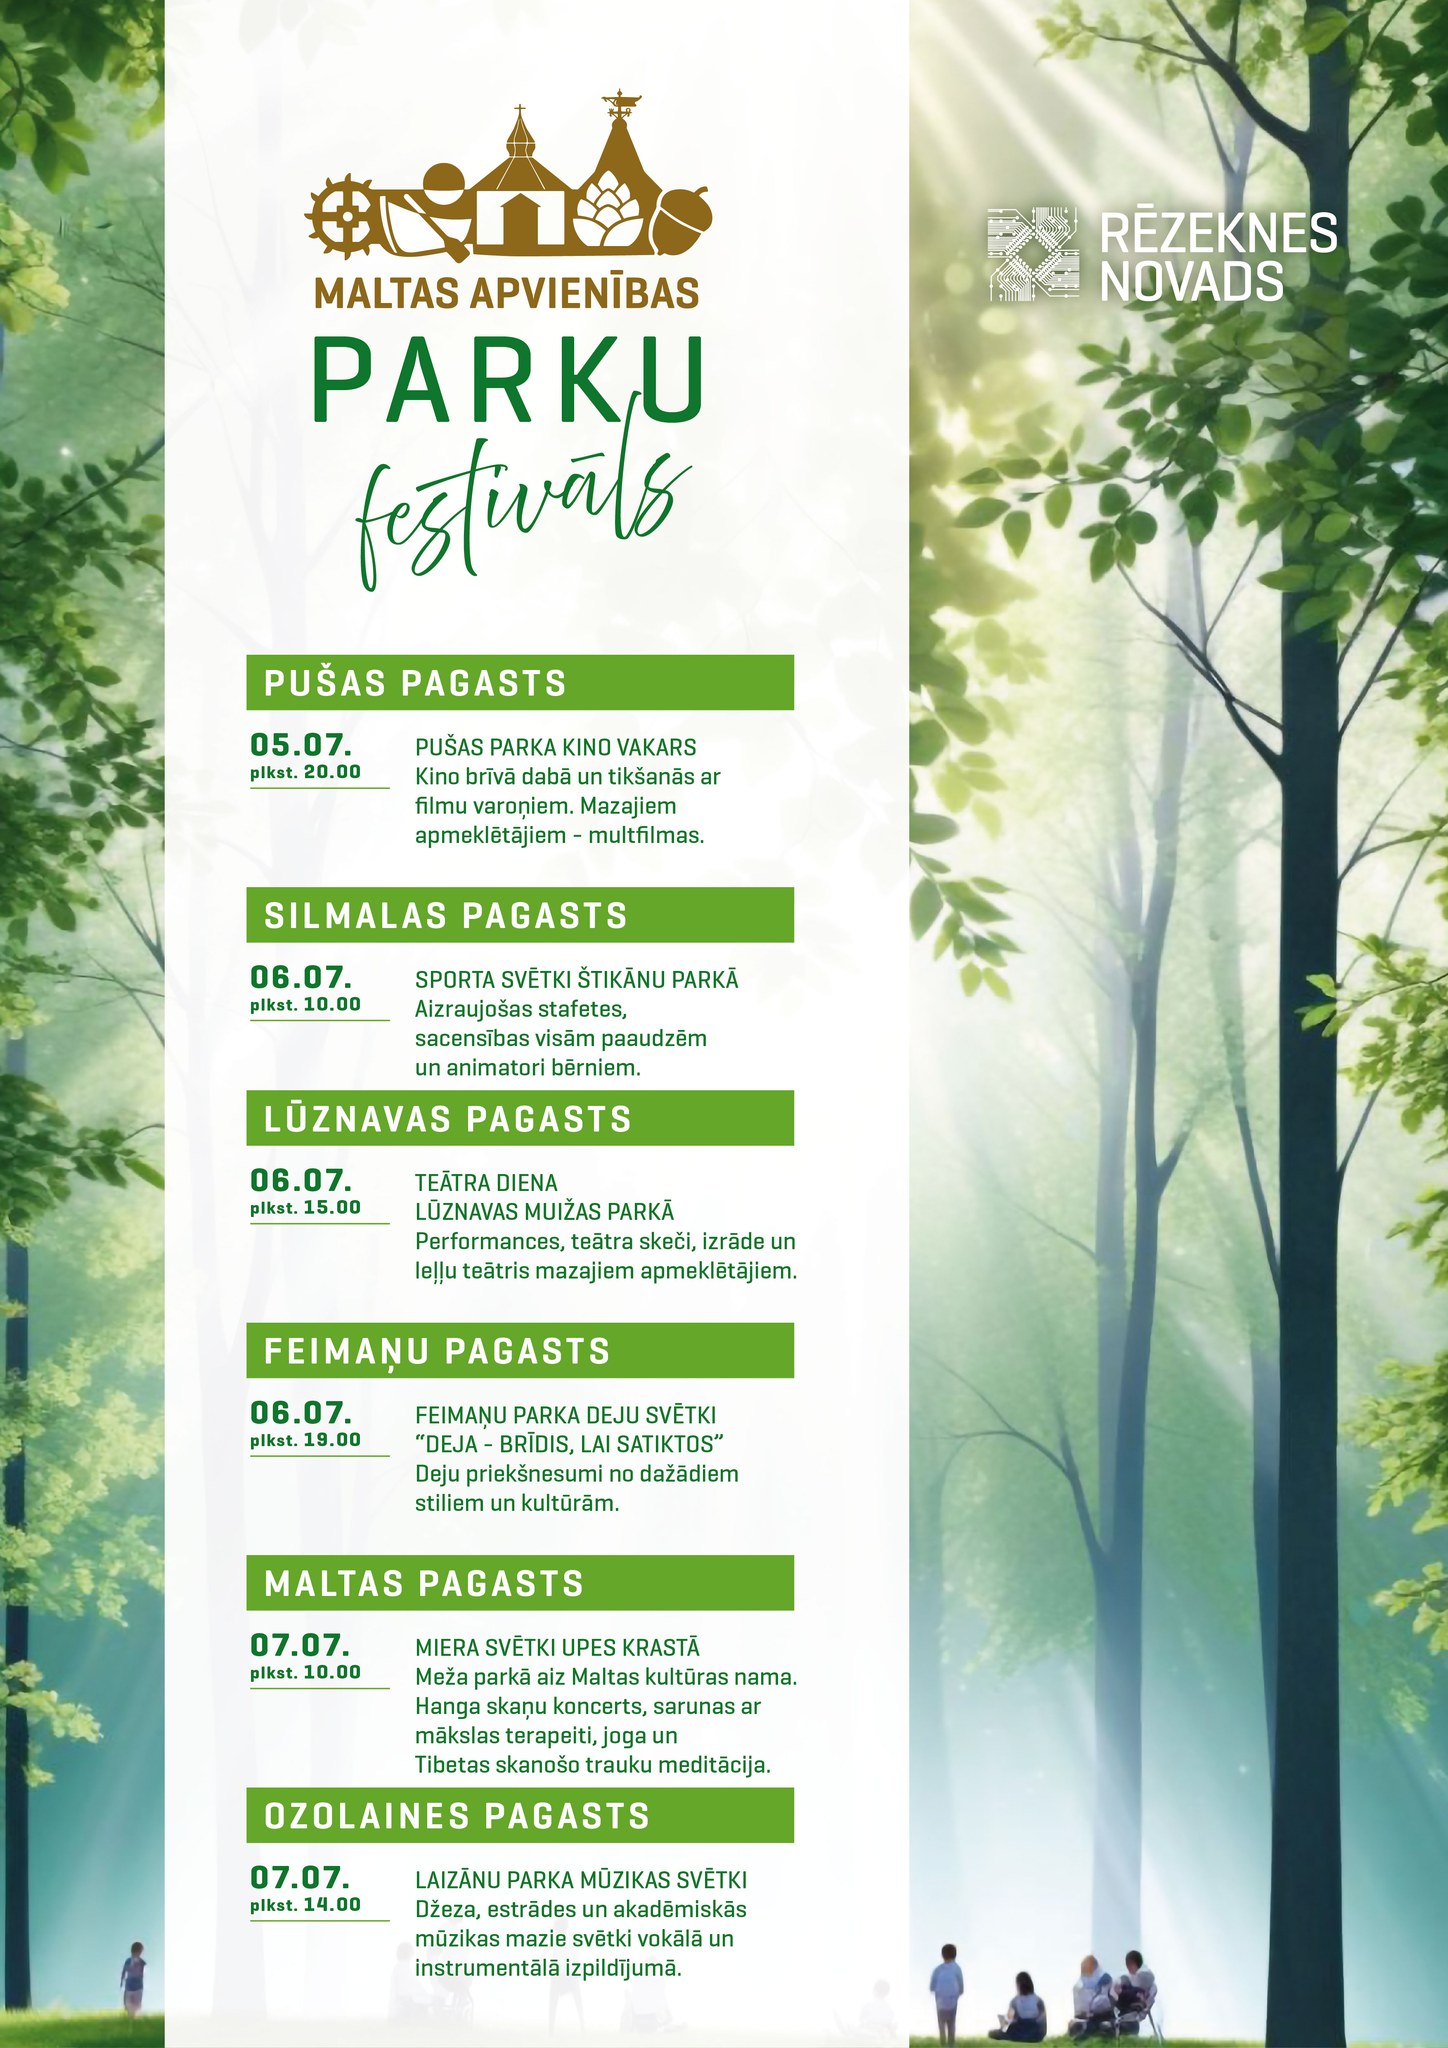 Parku festivals